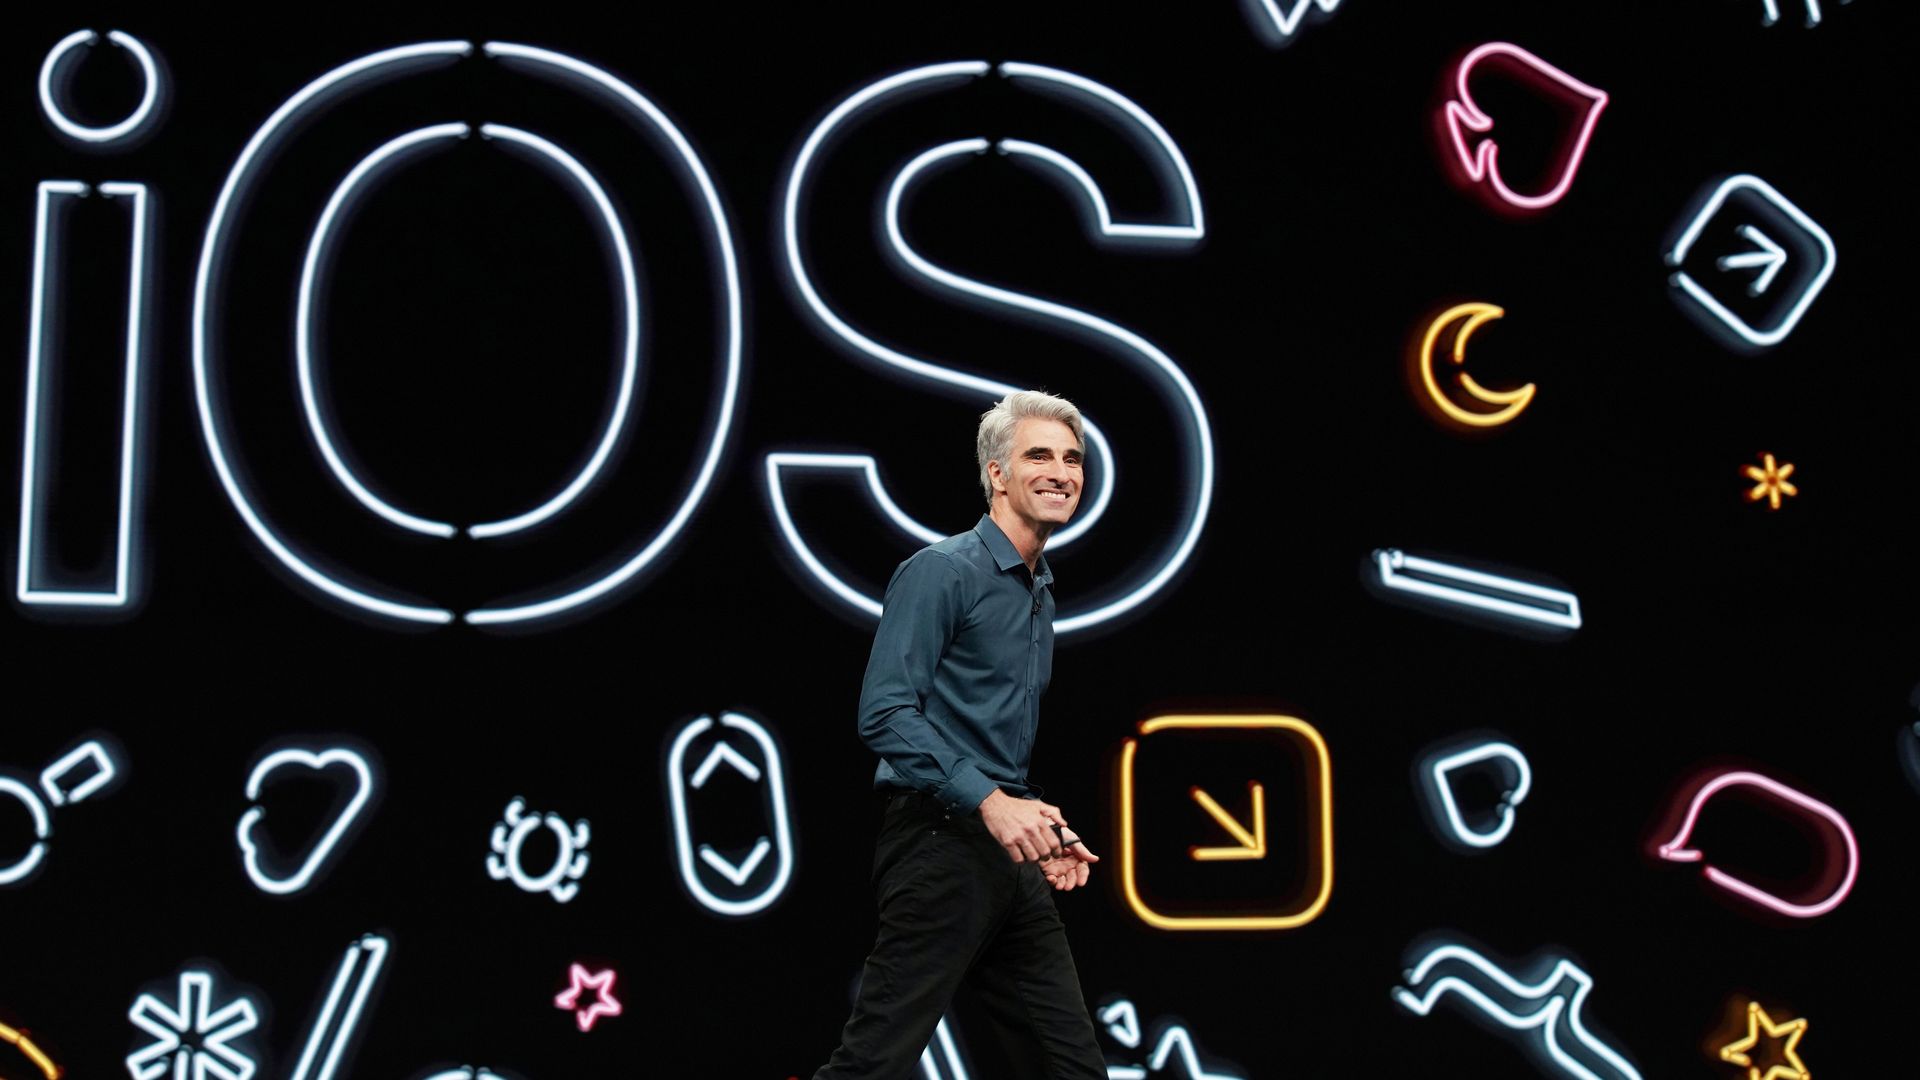 Craig Federighi unveiling iOS 13 at WWDC 2019.